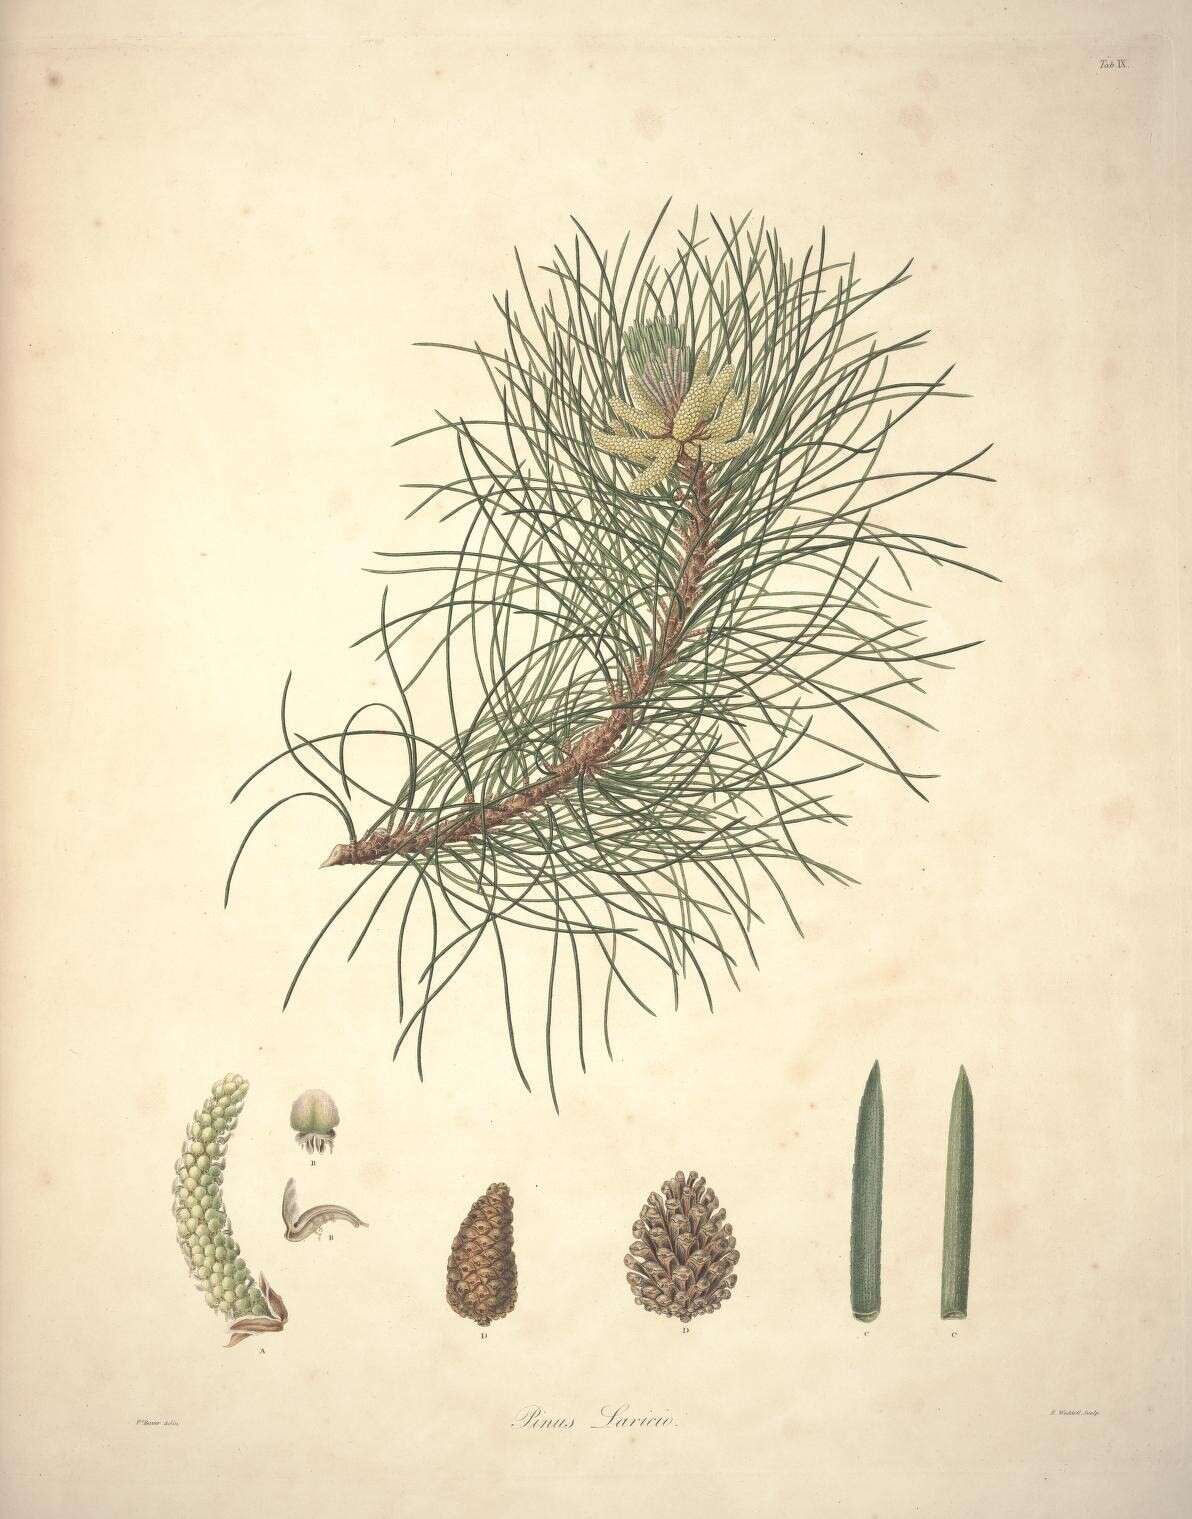 Sivun Pinus nigra subsp. laricio (Poir.) Maire kuva